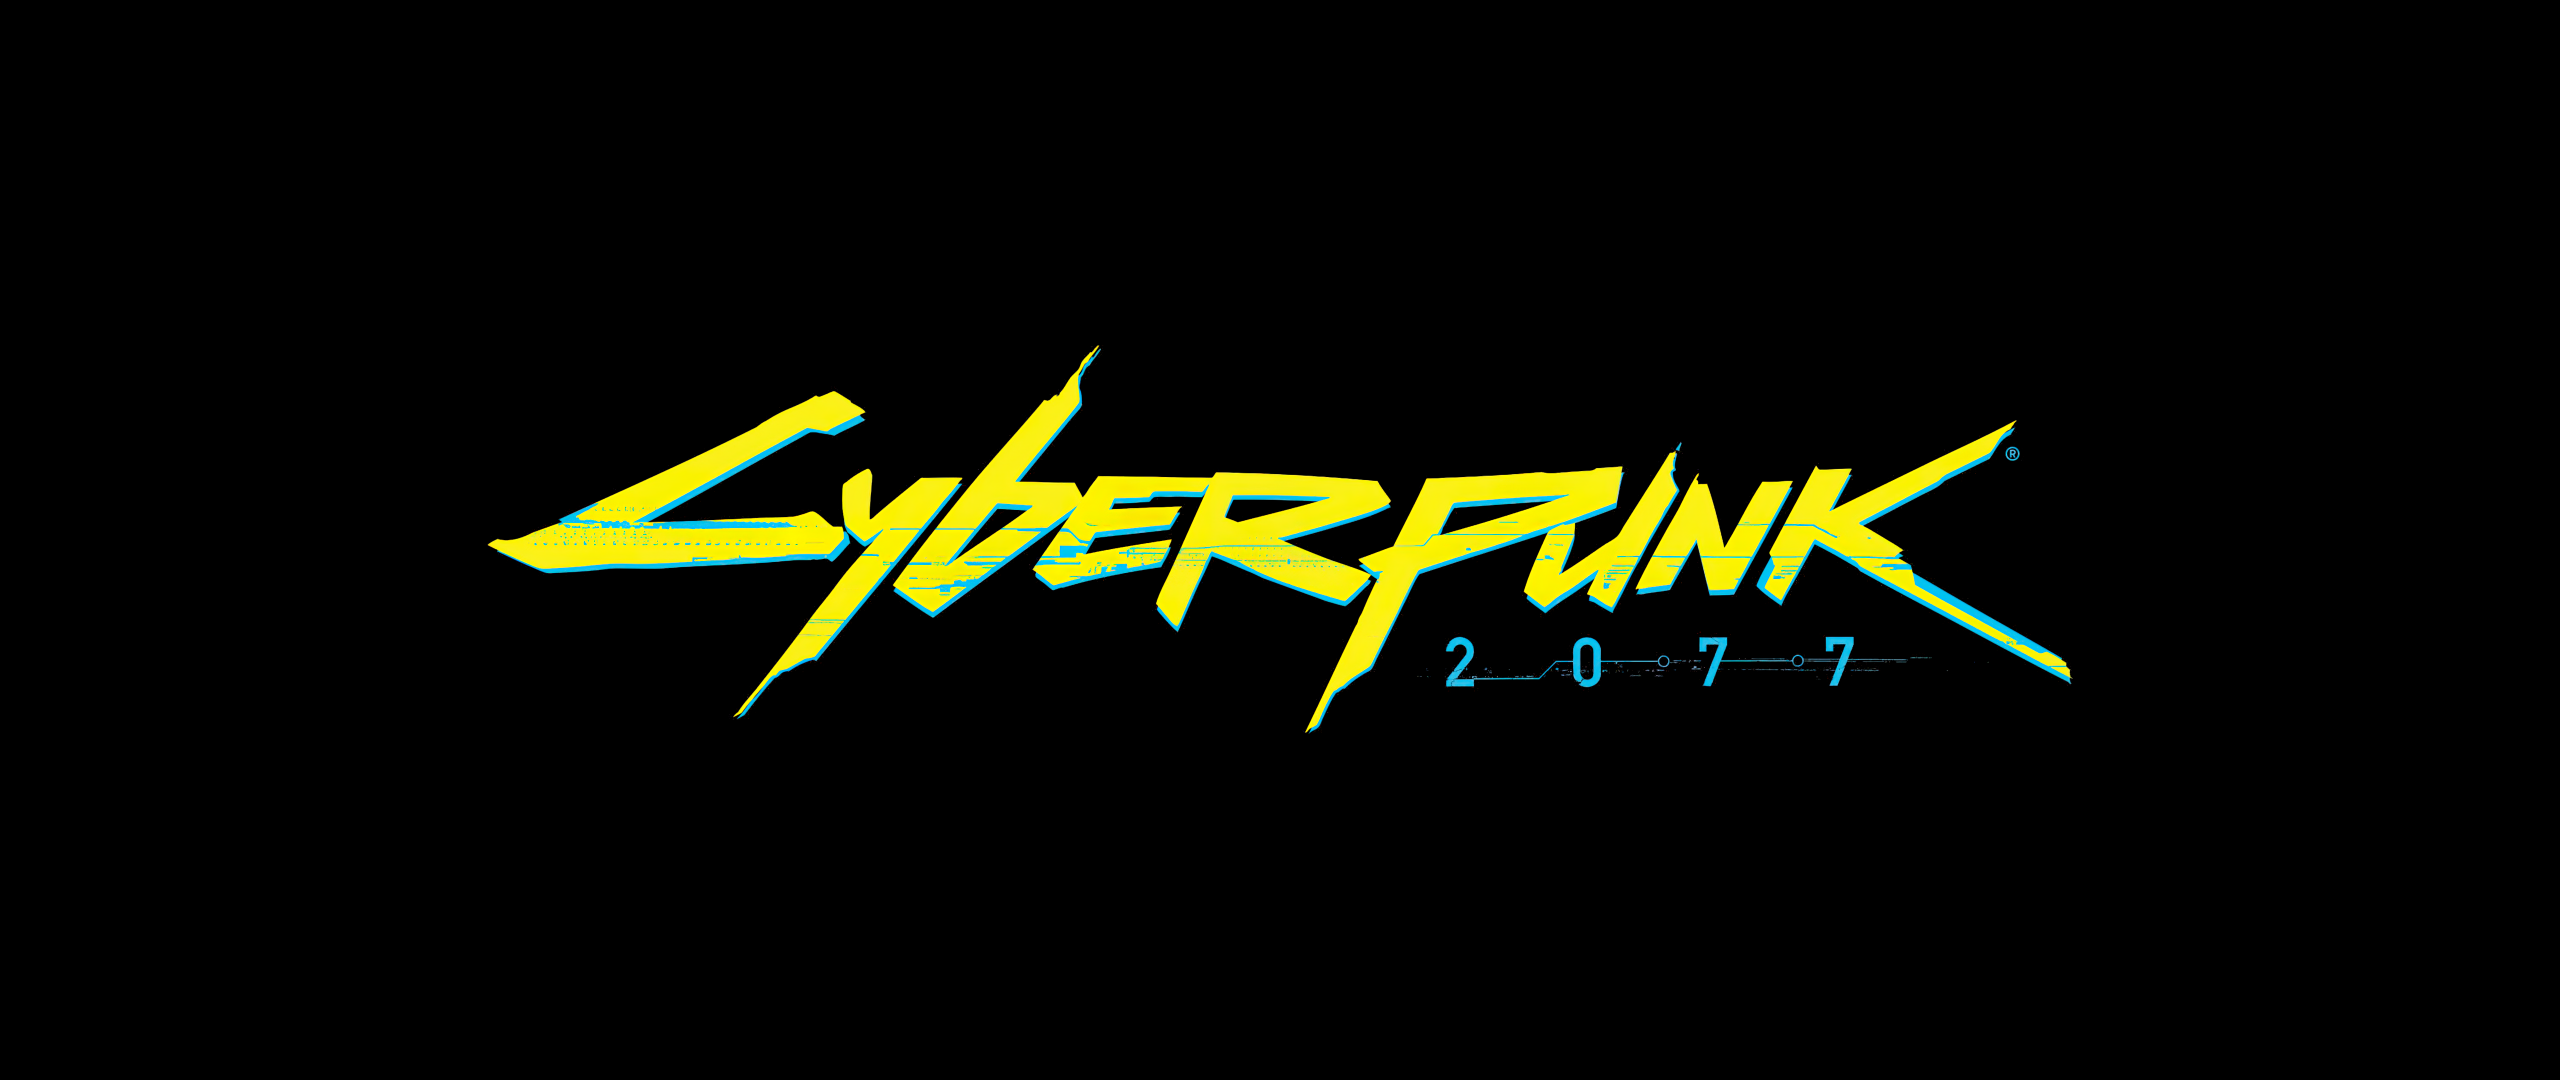 скачать логотип cyberpunk фото 94